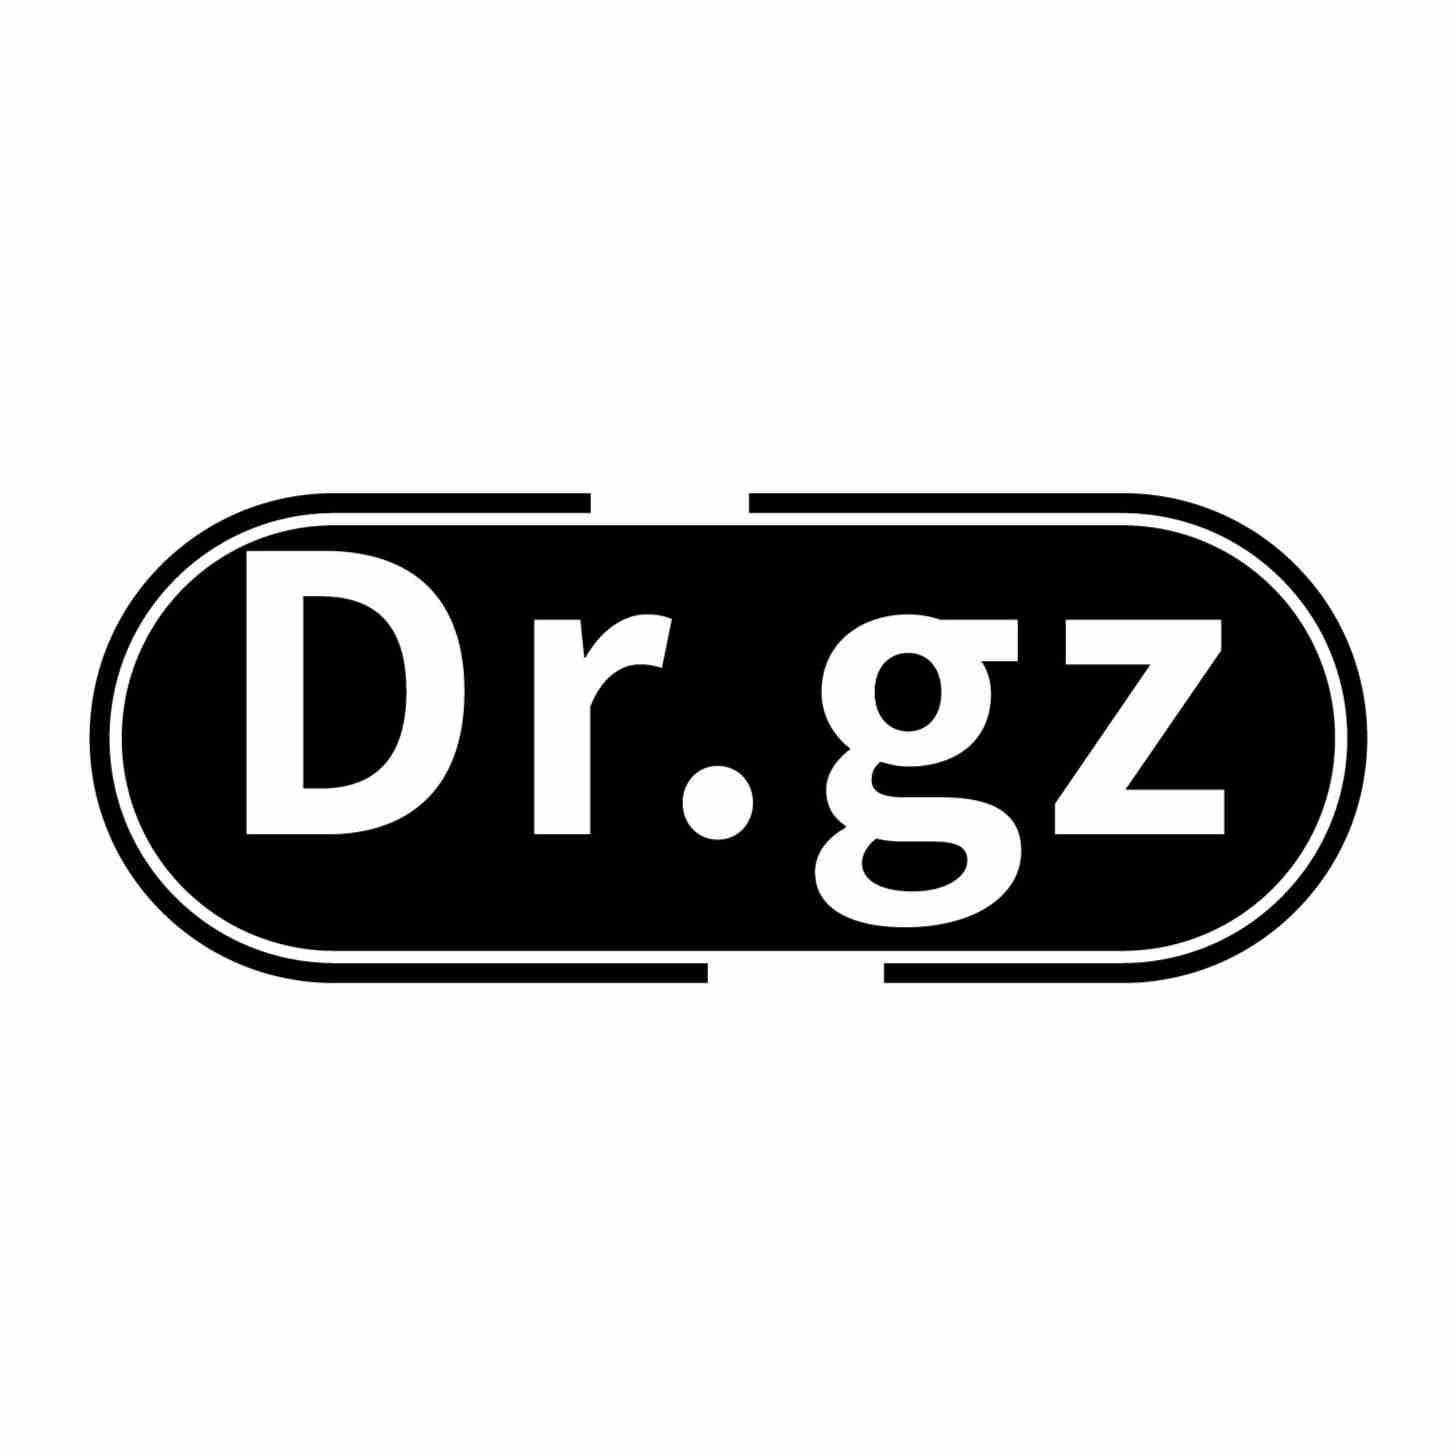 DR.GZ